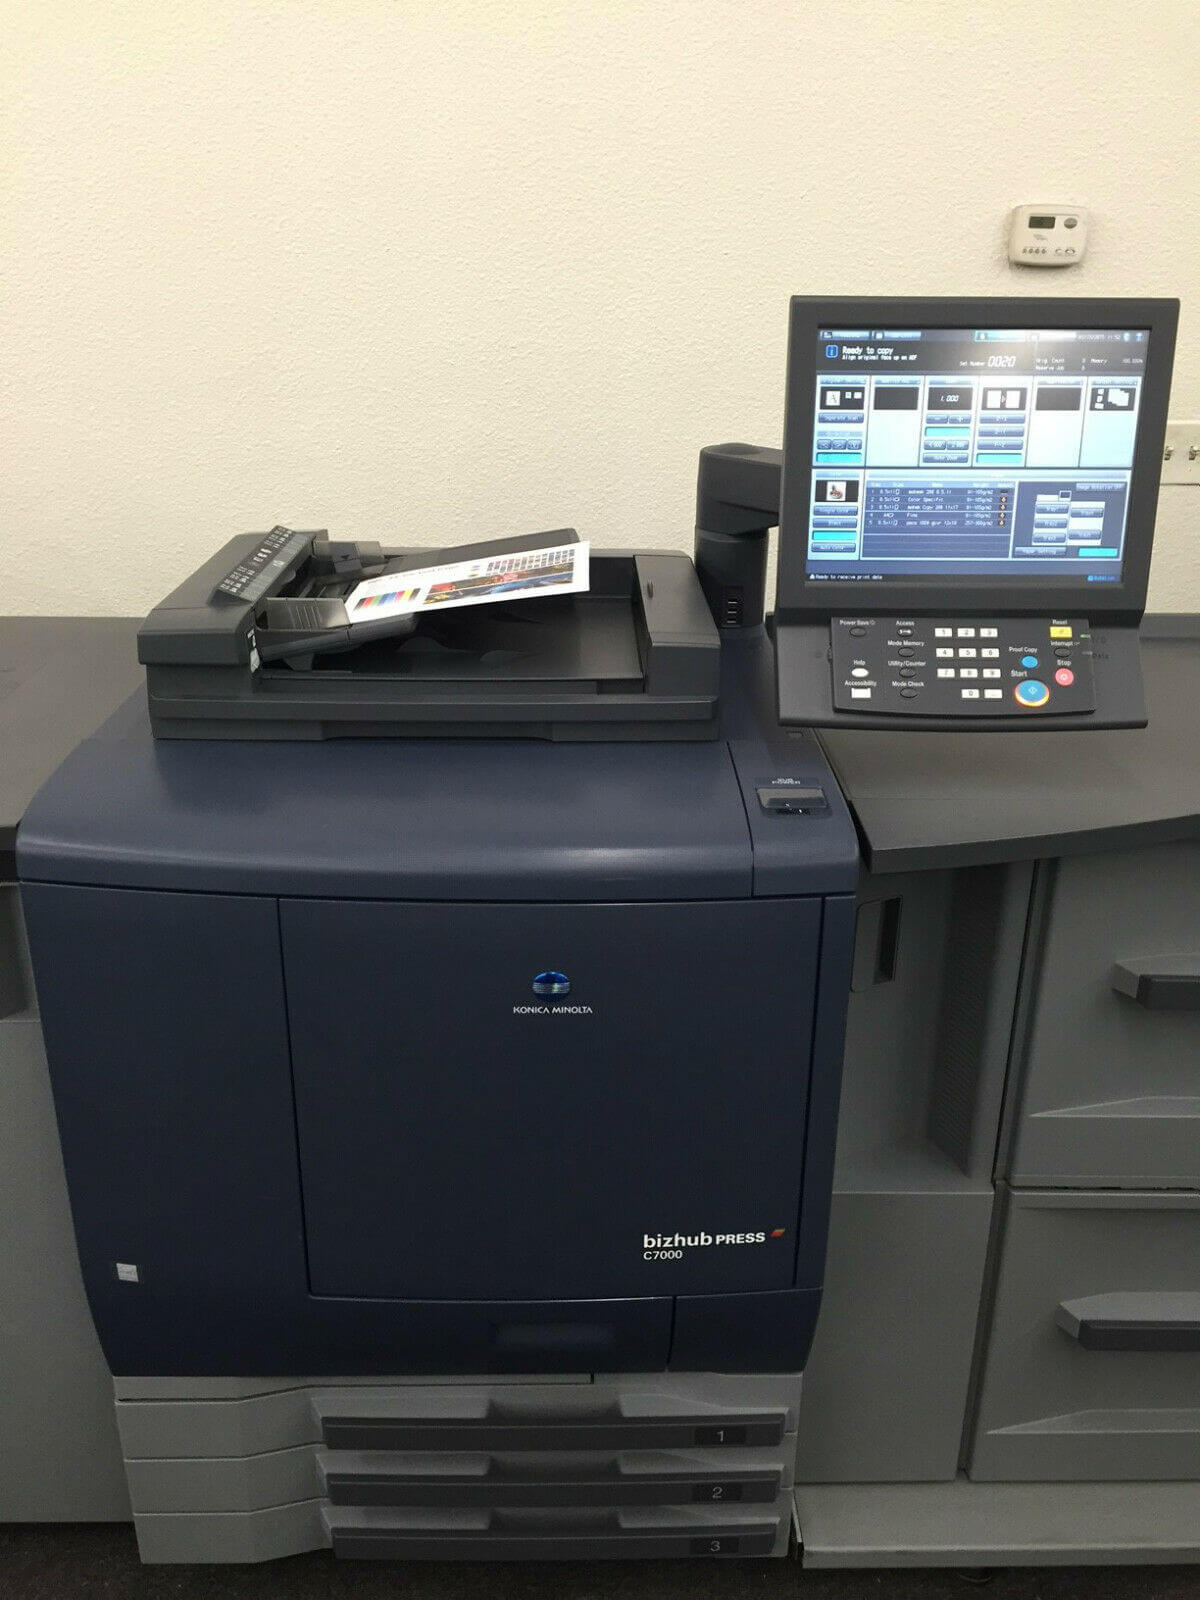 Konica Minolta Bizhub Press C7000 Copier Printer Scanner LCT Pro 80 Fiery 630k - copier-clearance-center